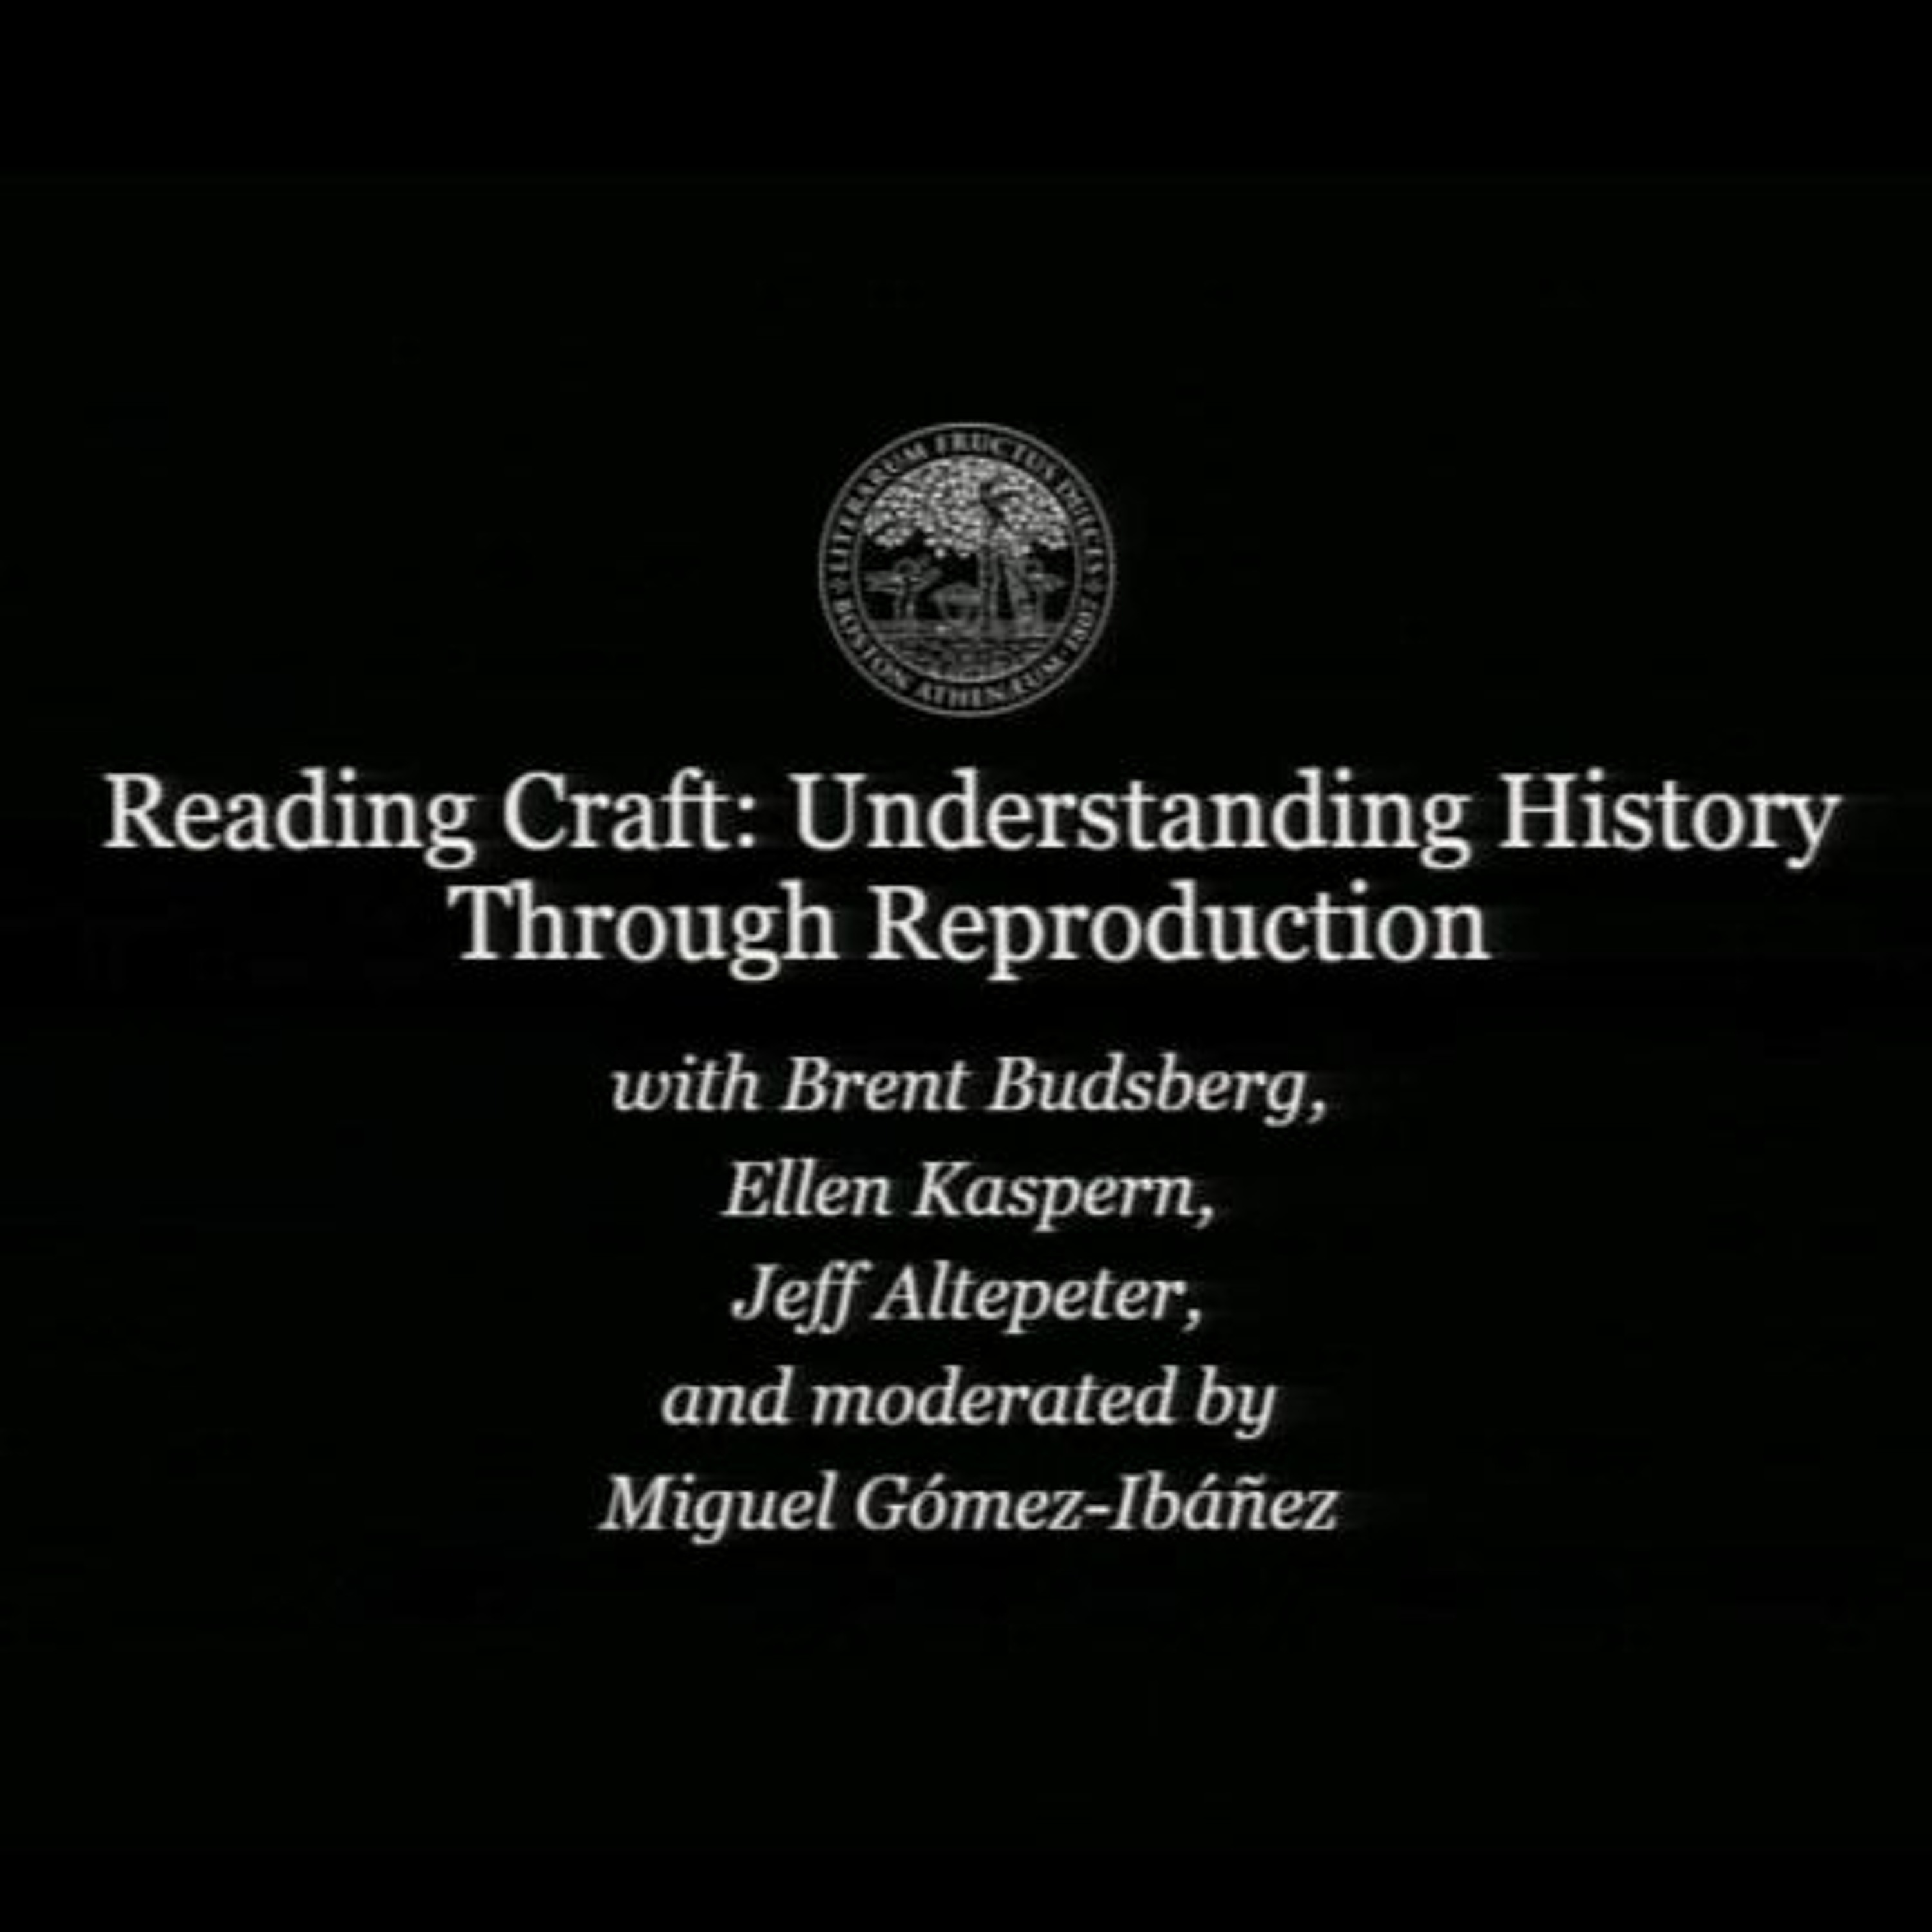 Brent Budsberg, Ellen Kaspern, and Jeff Altepeter, “Reading Craft”